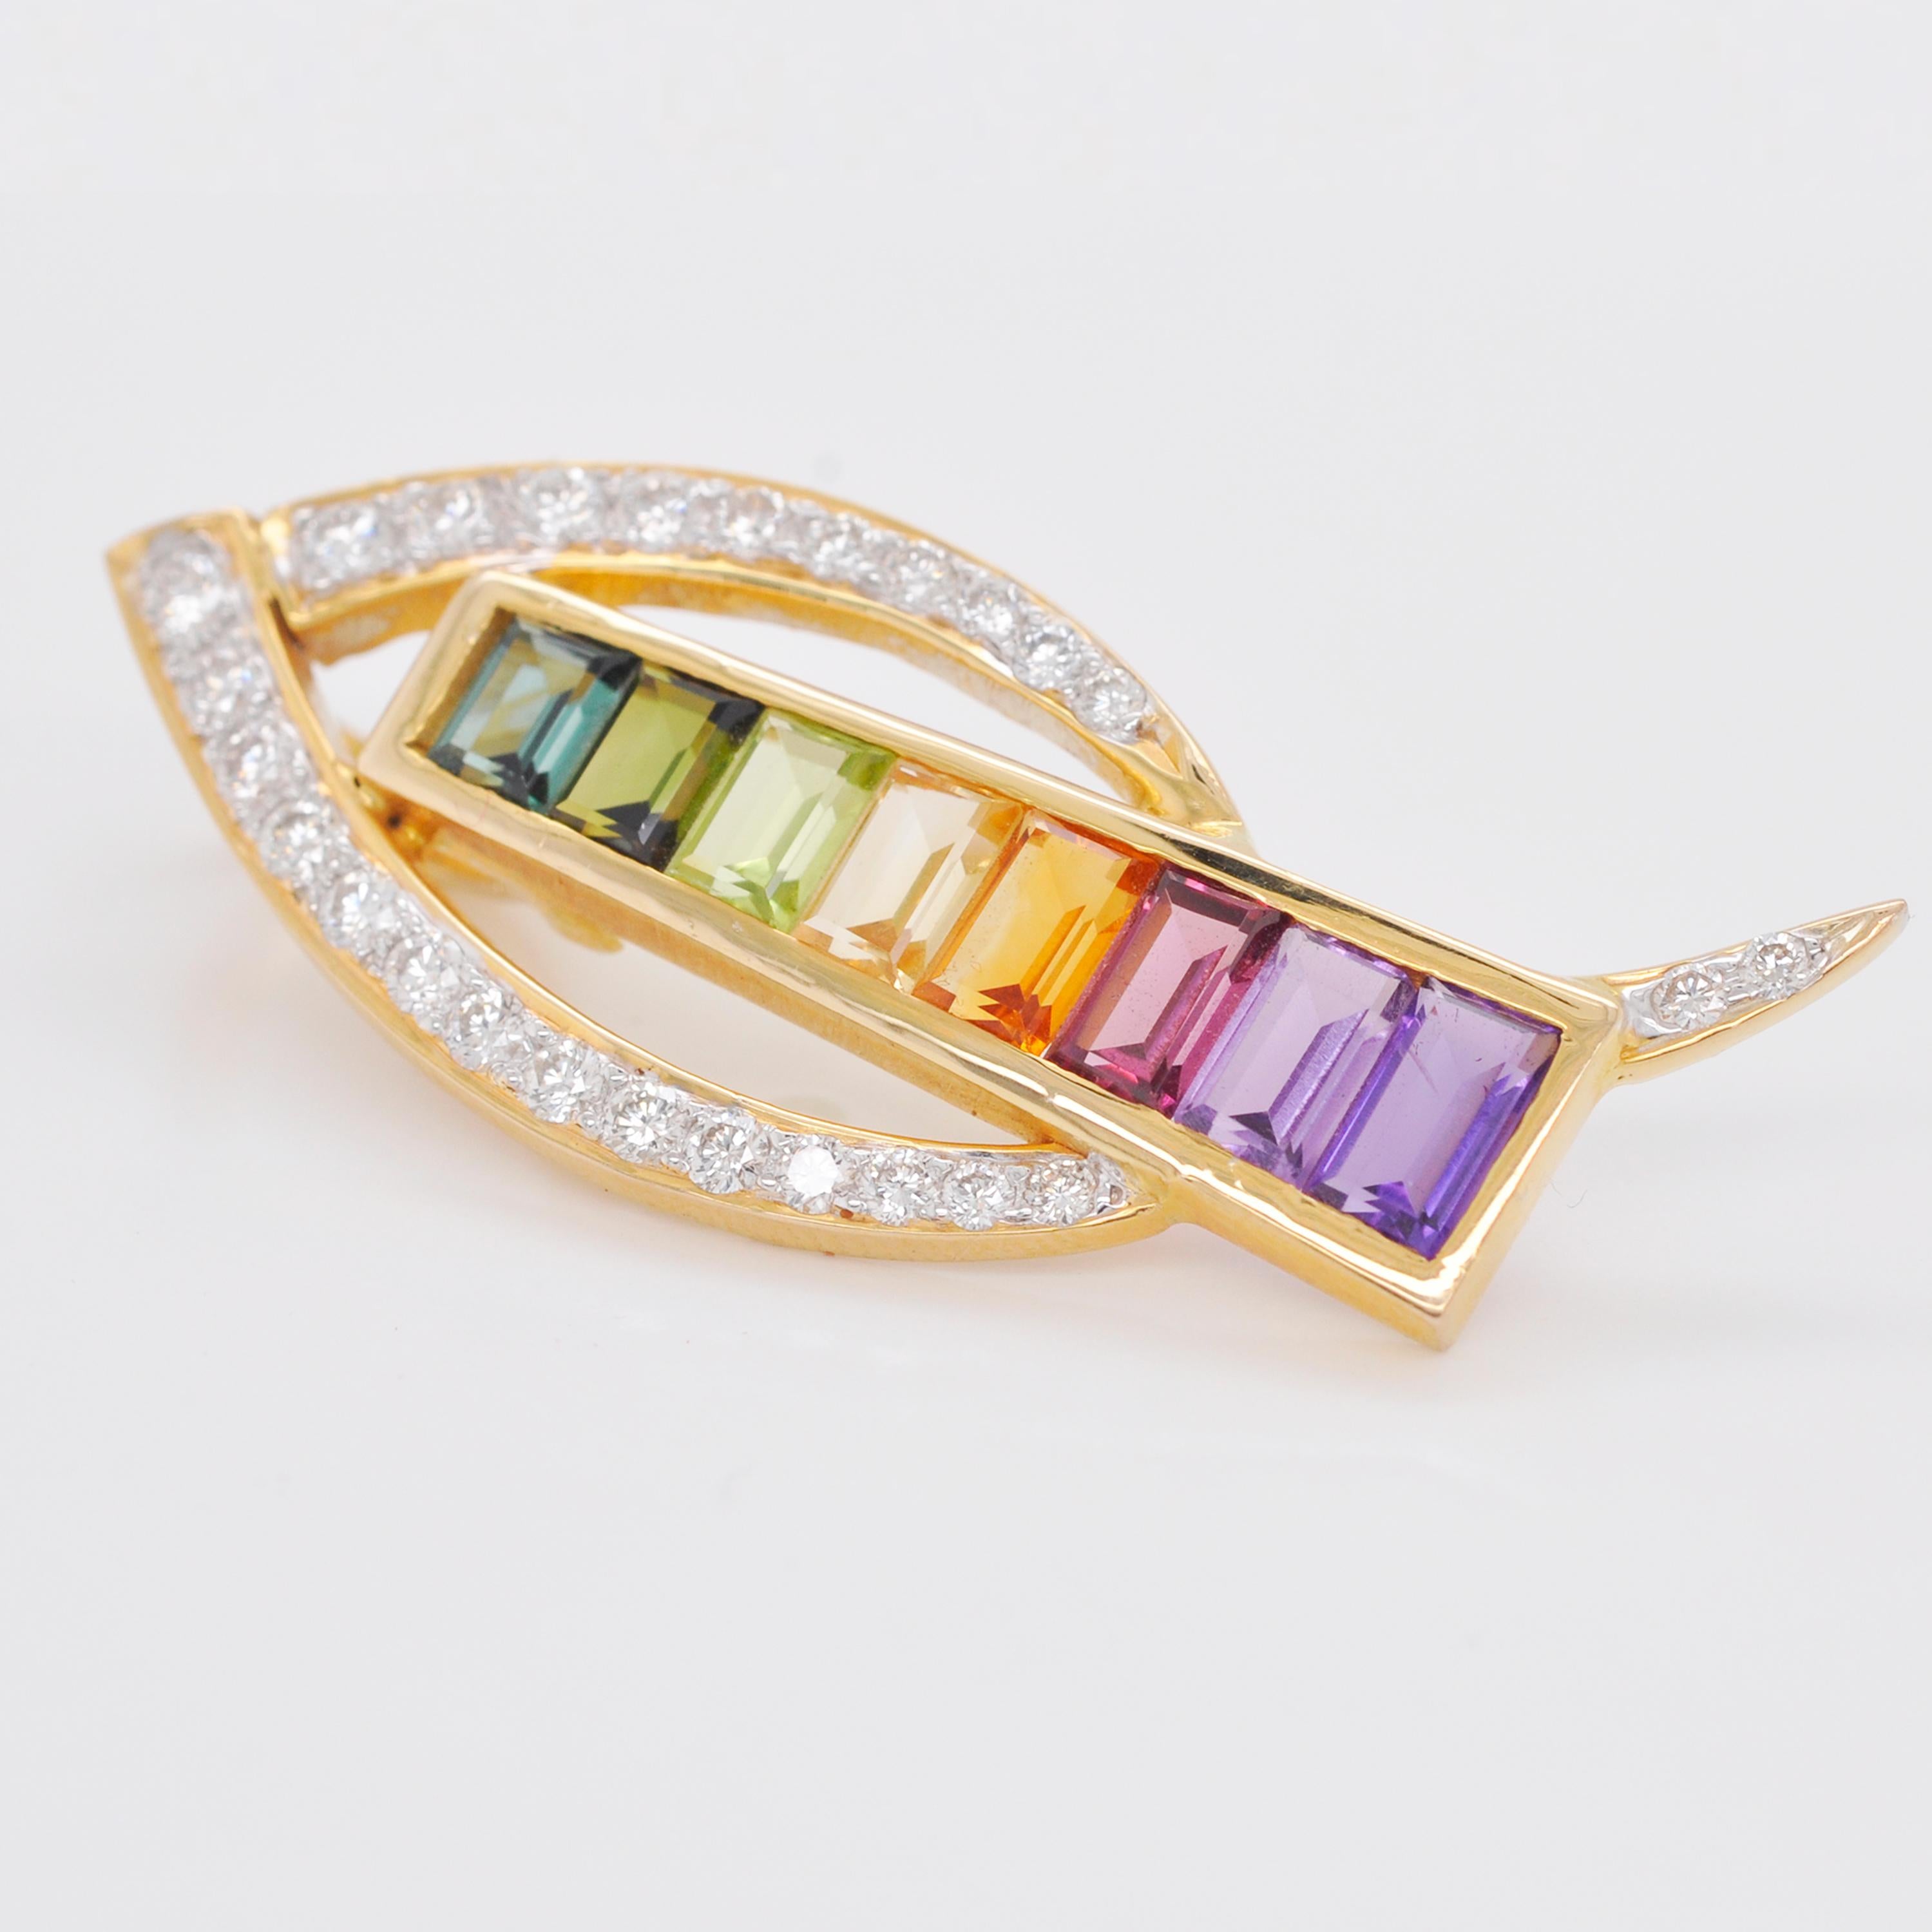 Collier pendentif contemporain en or 18 carats avec diamants et pierres précieuses multicolores en forme d'arc-en-ciel en vente 1